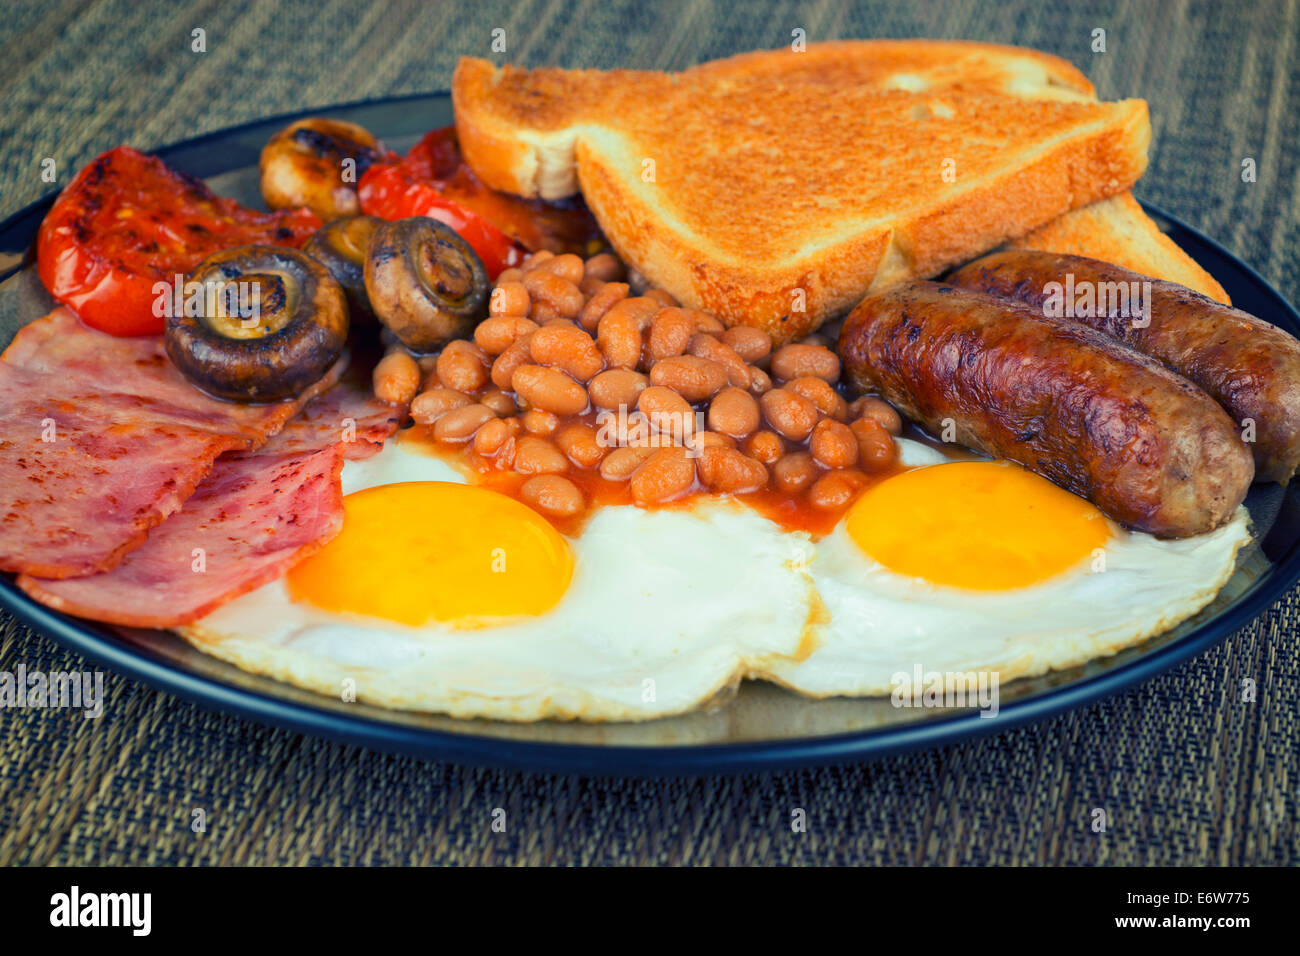 Full English Breakfast Stock Photo